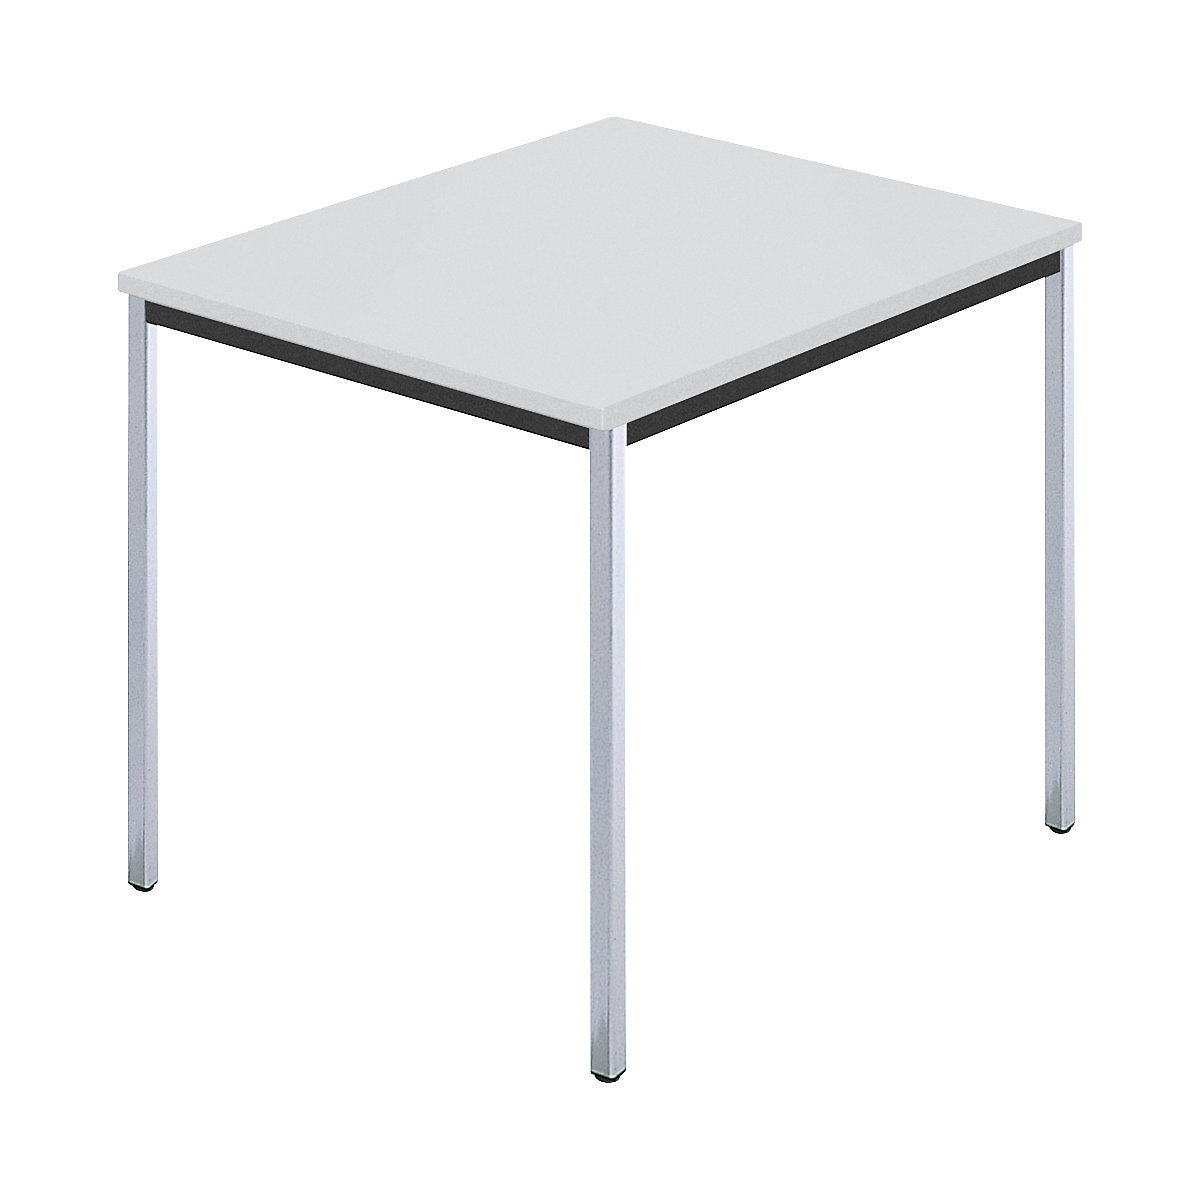 Obdélníkový stůl, čtyřhranná trubka pochromovaná, š x h 800 x 800 mm, šedá-6